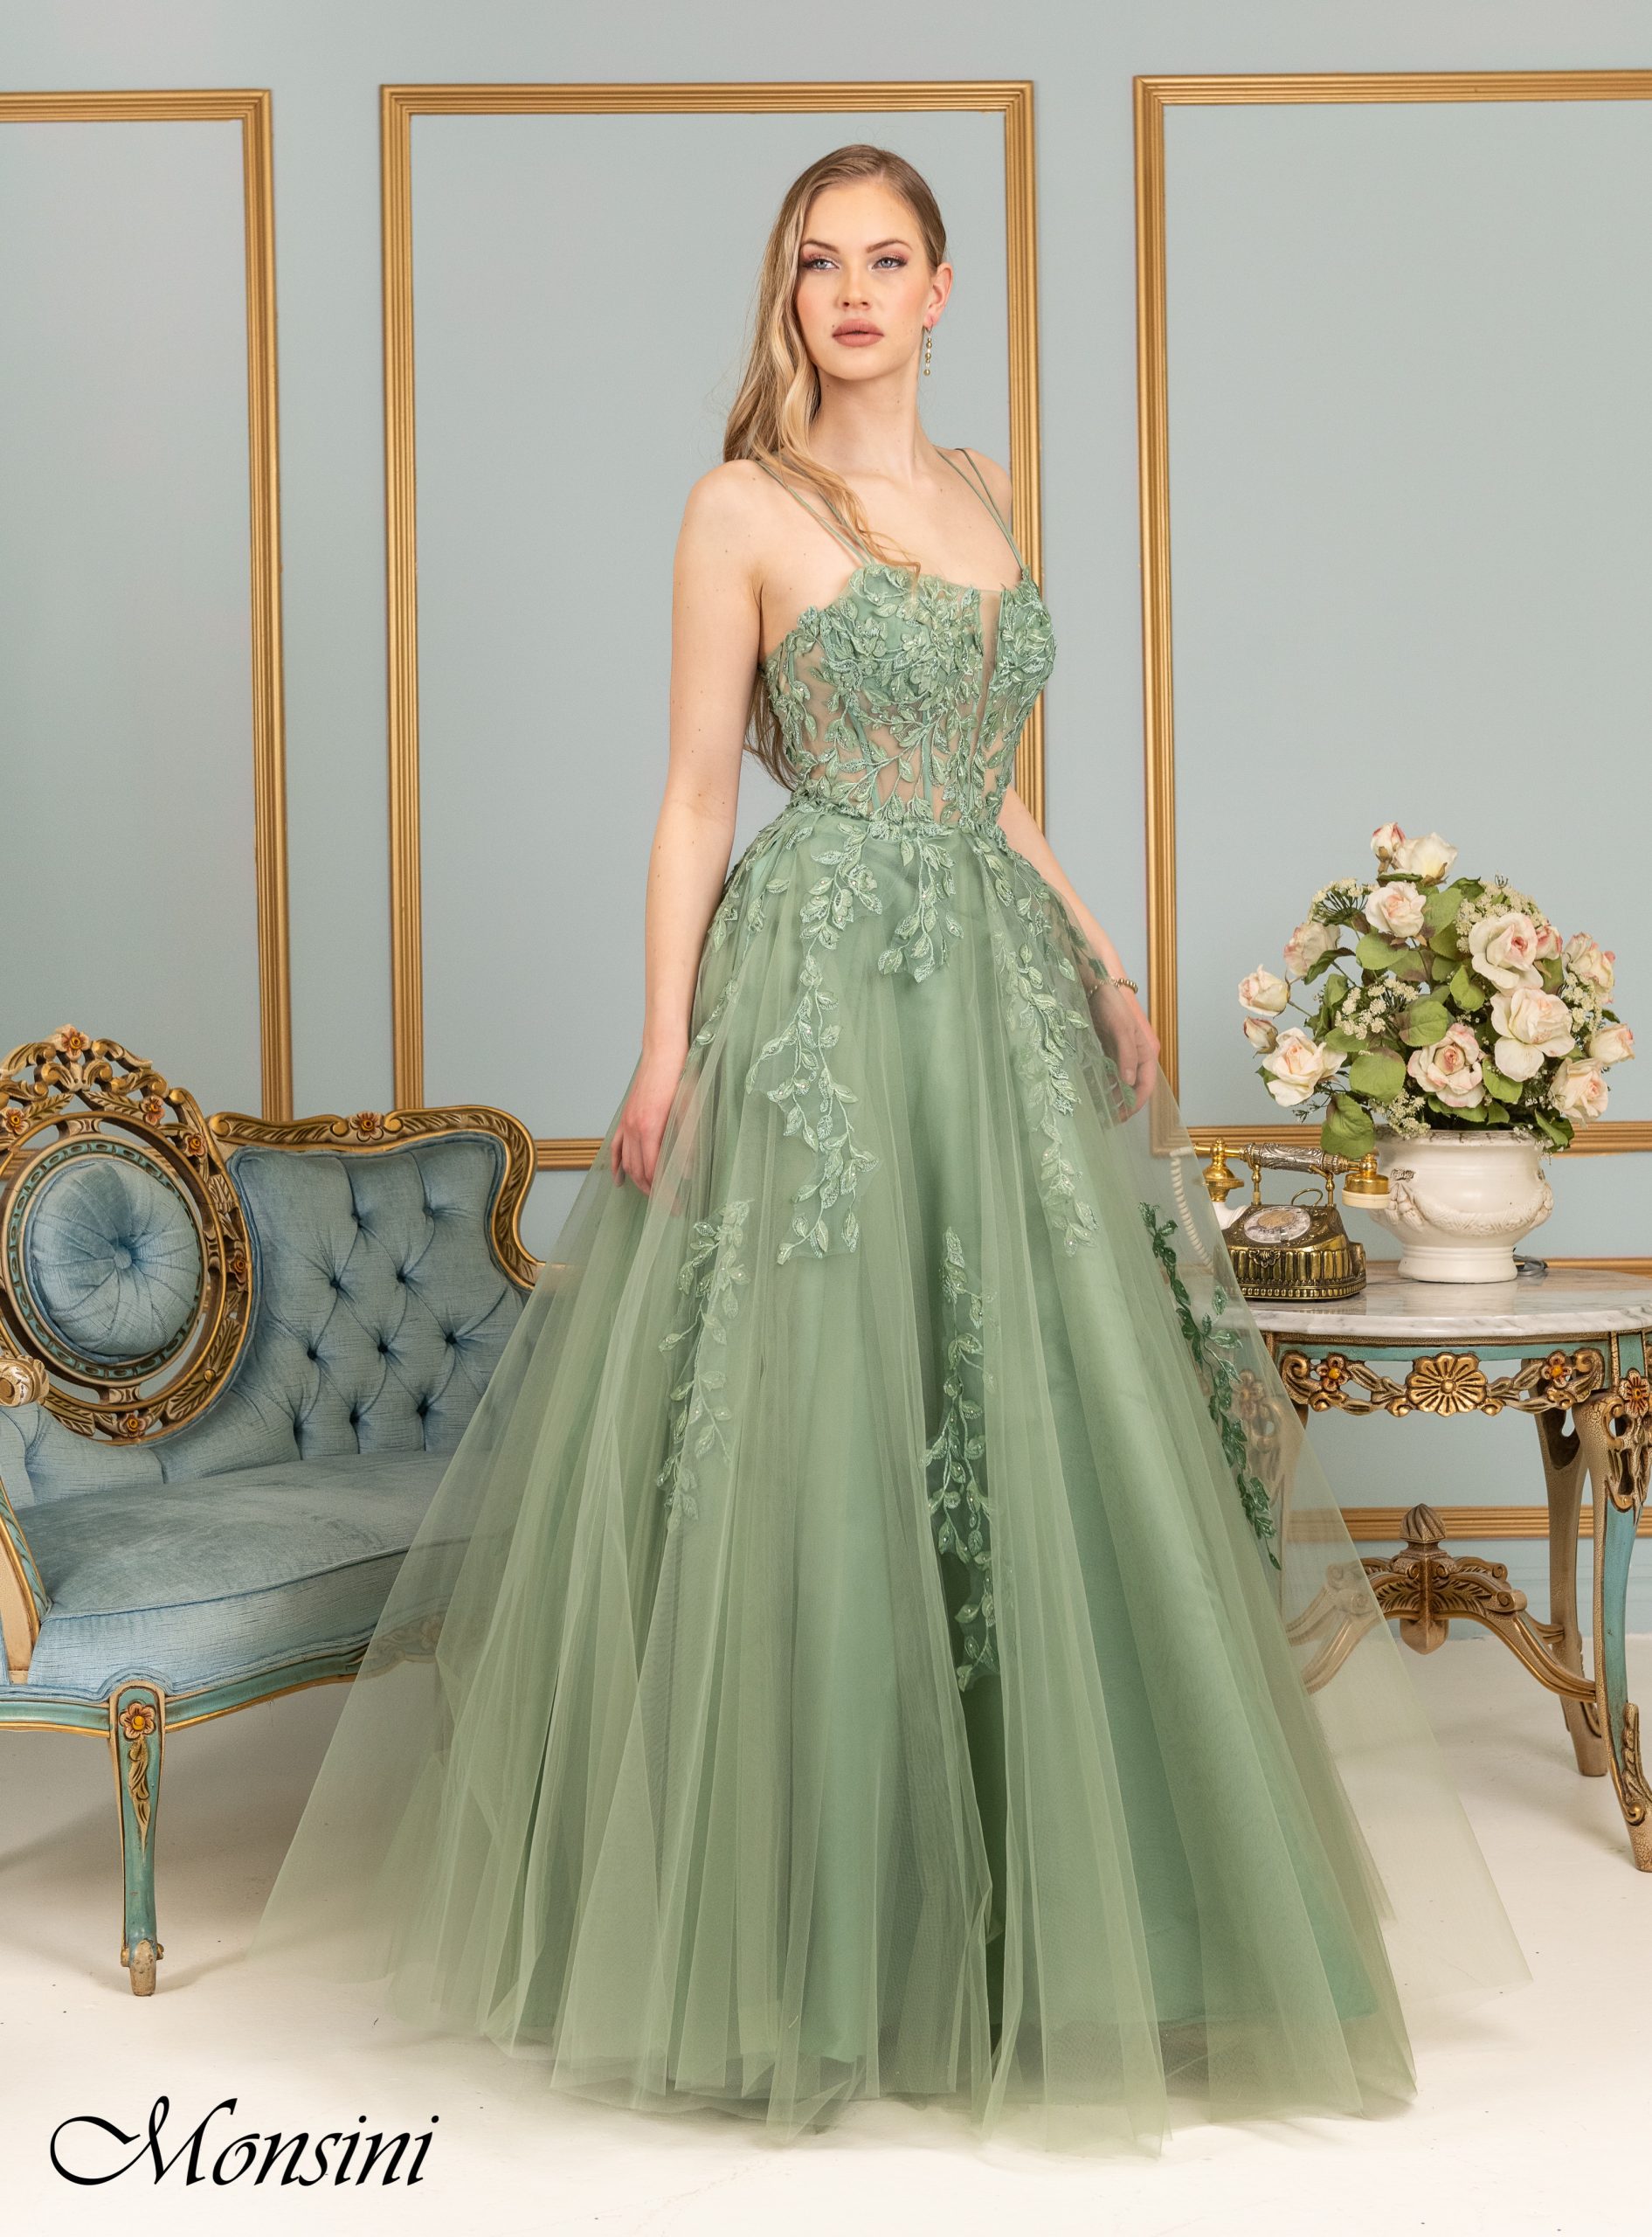 31932 - Monsini Prom Dresses available at Lisa's Bridal